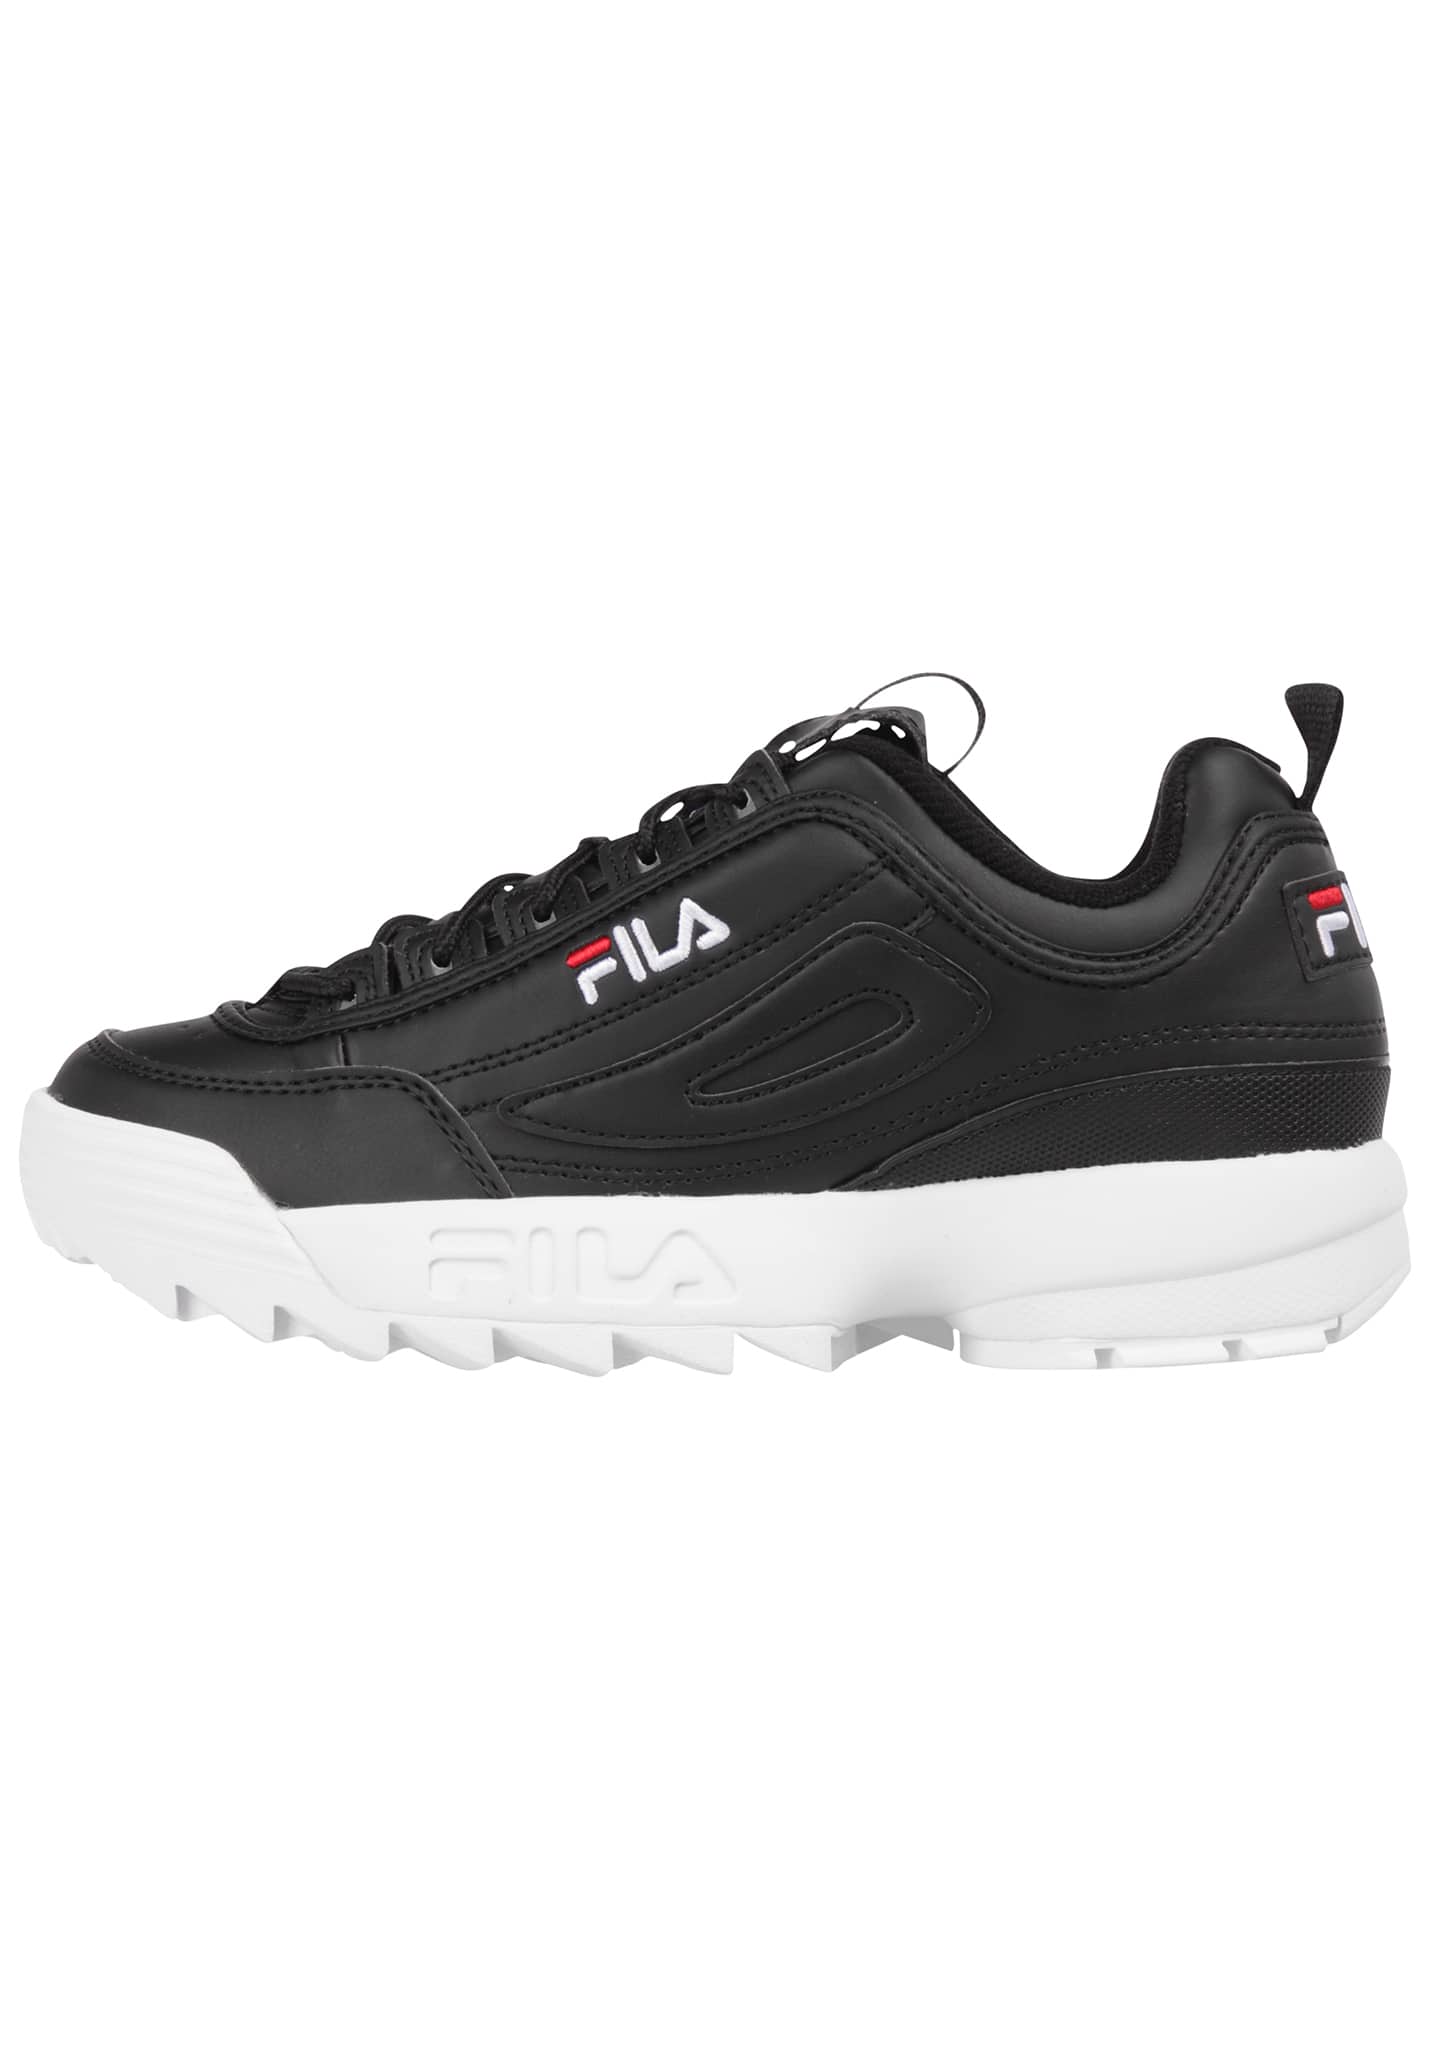 Fila Disruptor Low Sneaker schwarz weiß 42